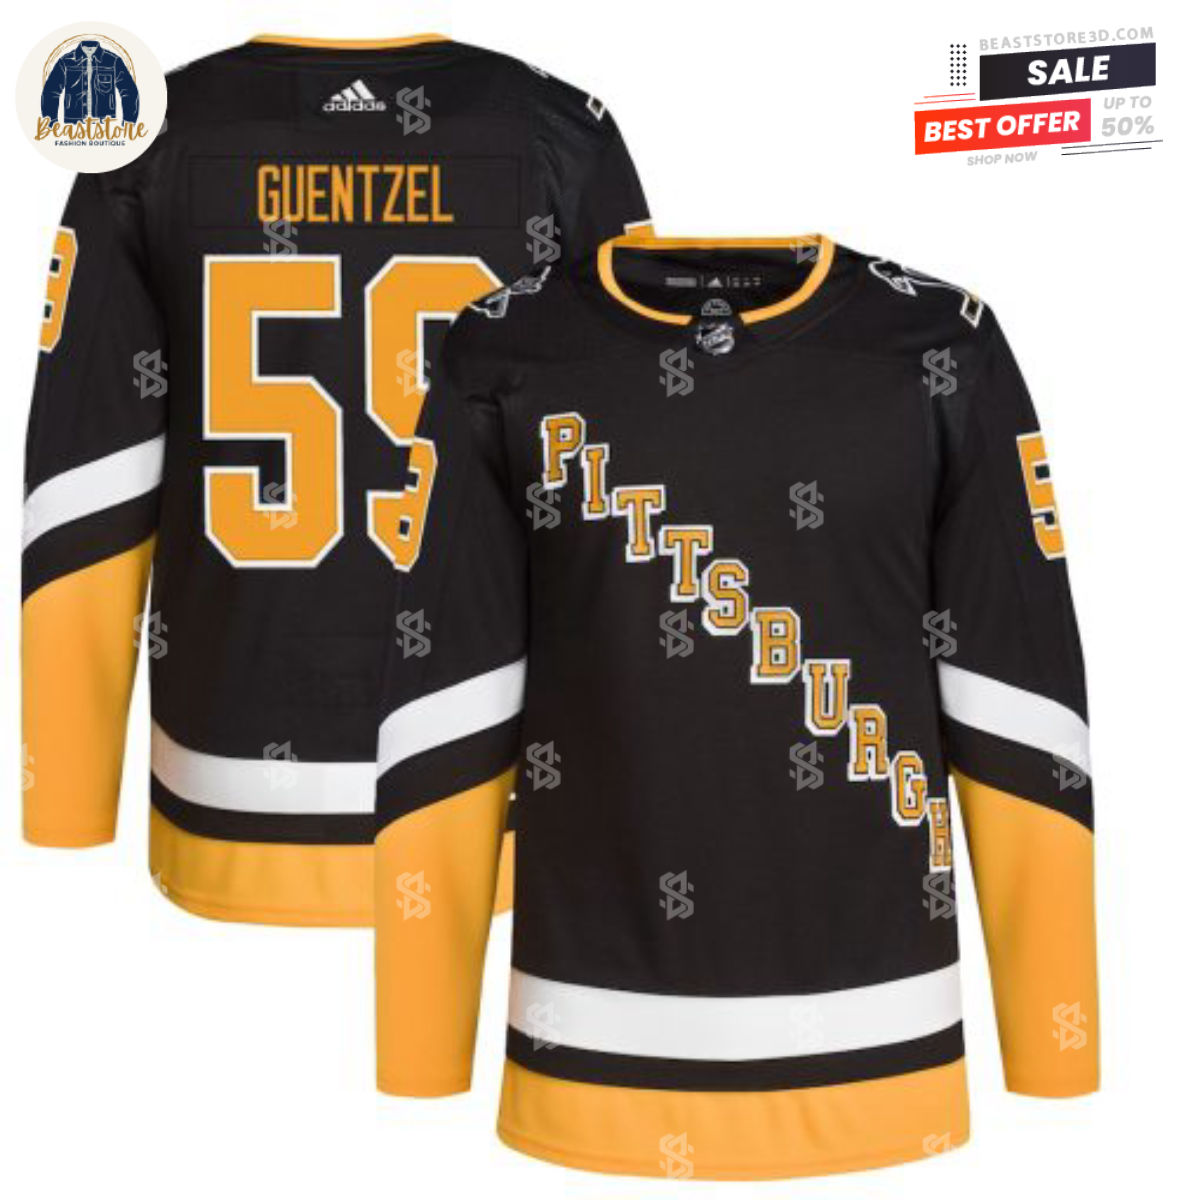 Pittsburgh Penguins Jake Guentzel Black Alternate Adiddas NHL Hockey Jerseys